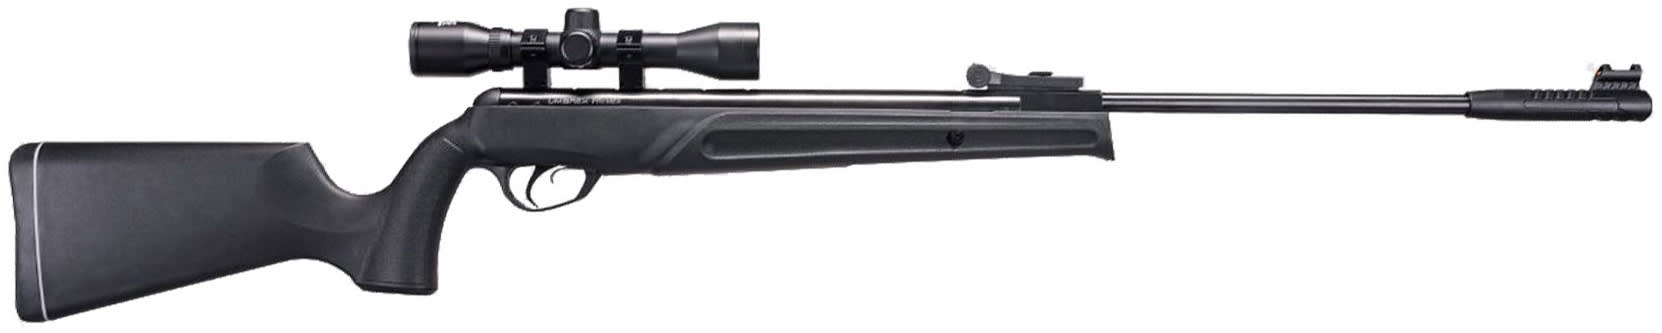 Umarex® Prymex® .177 Air Rifle Combo